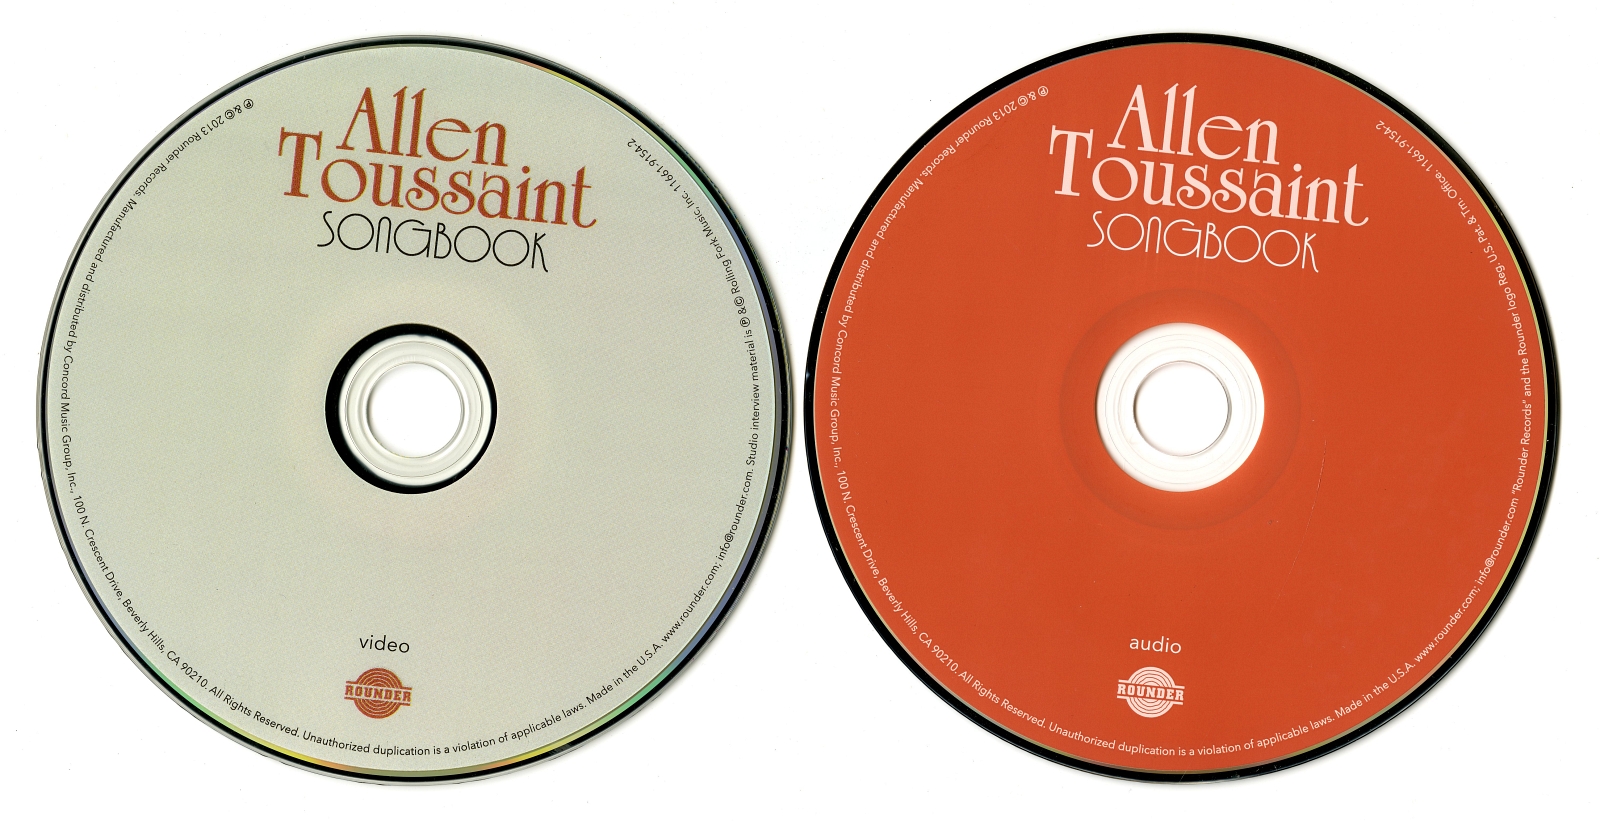 Allen Toussaint SONGBOOK label